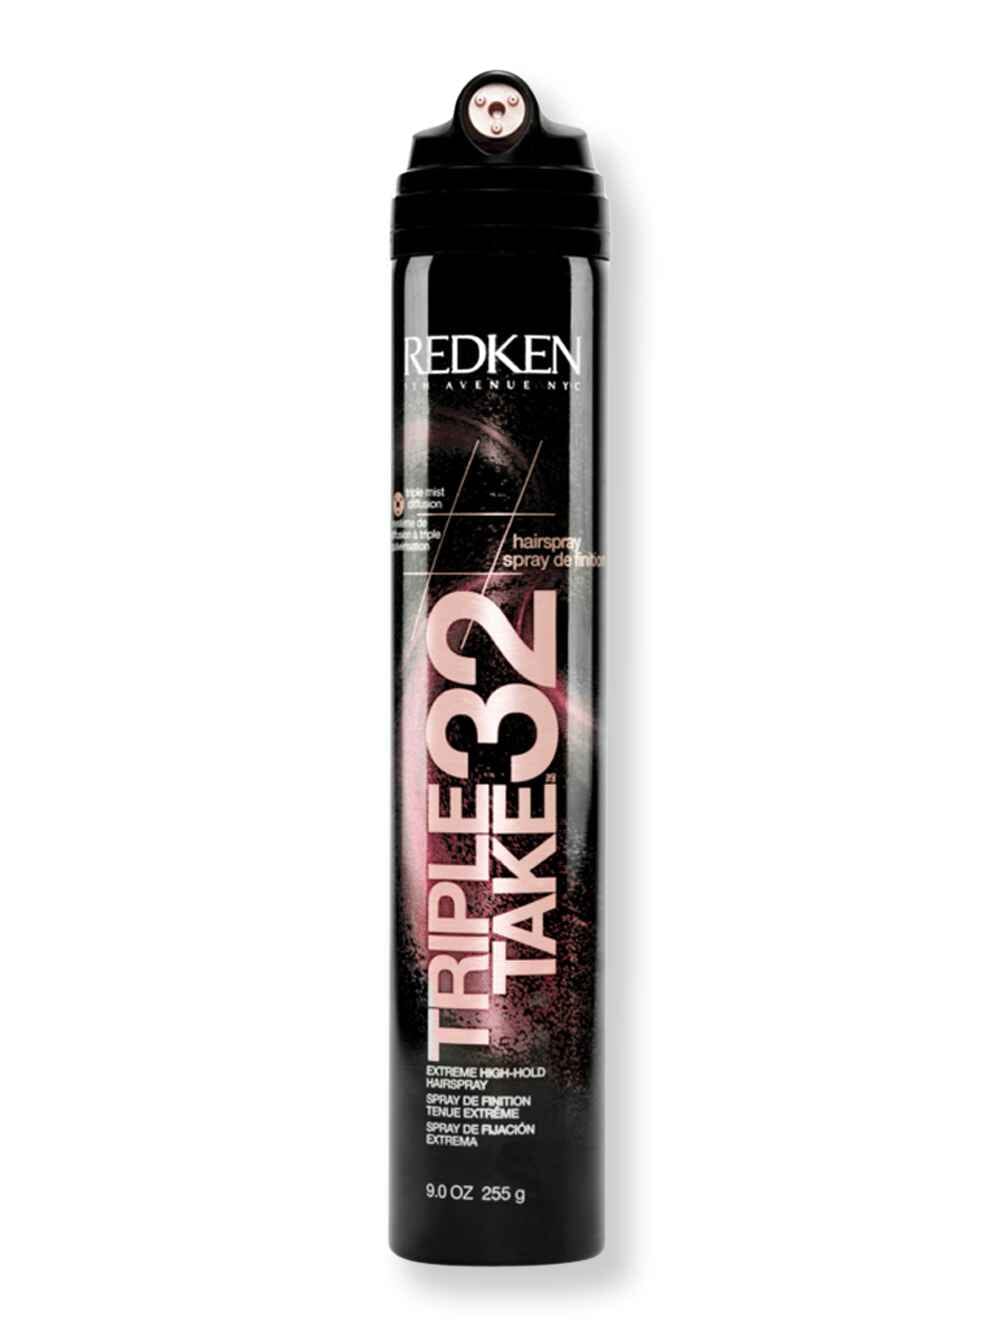 Redken Redken Triple Take 32 Extreme High Hold Hair Spray 9 oz Hair Sprays 